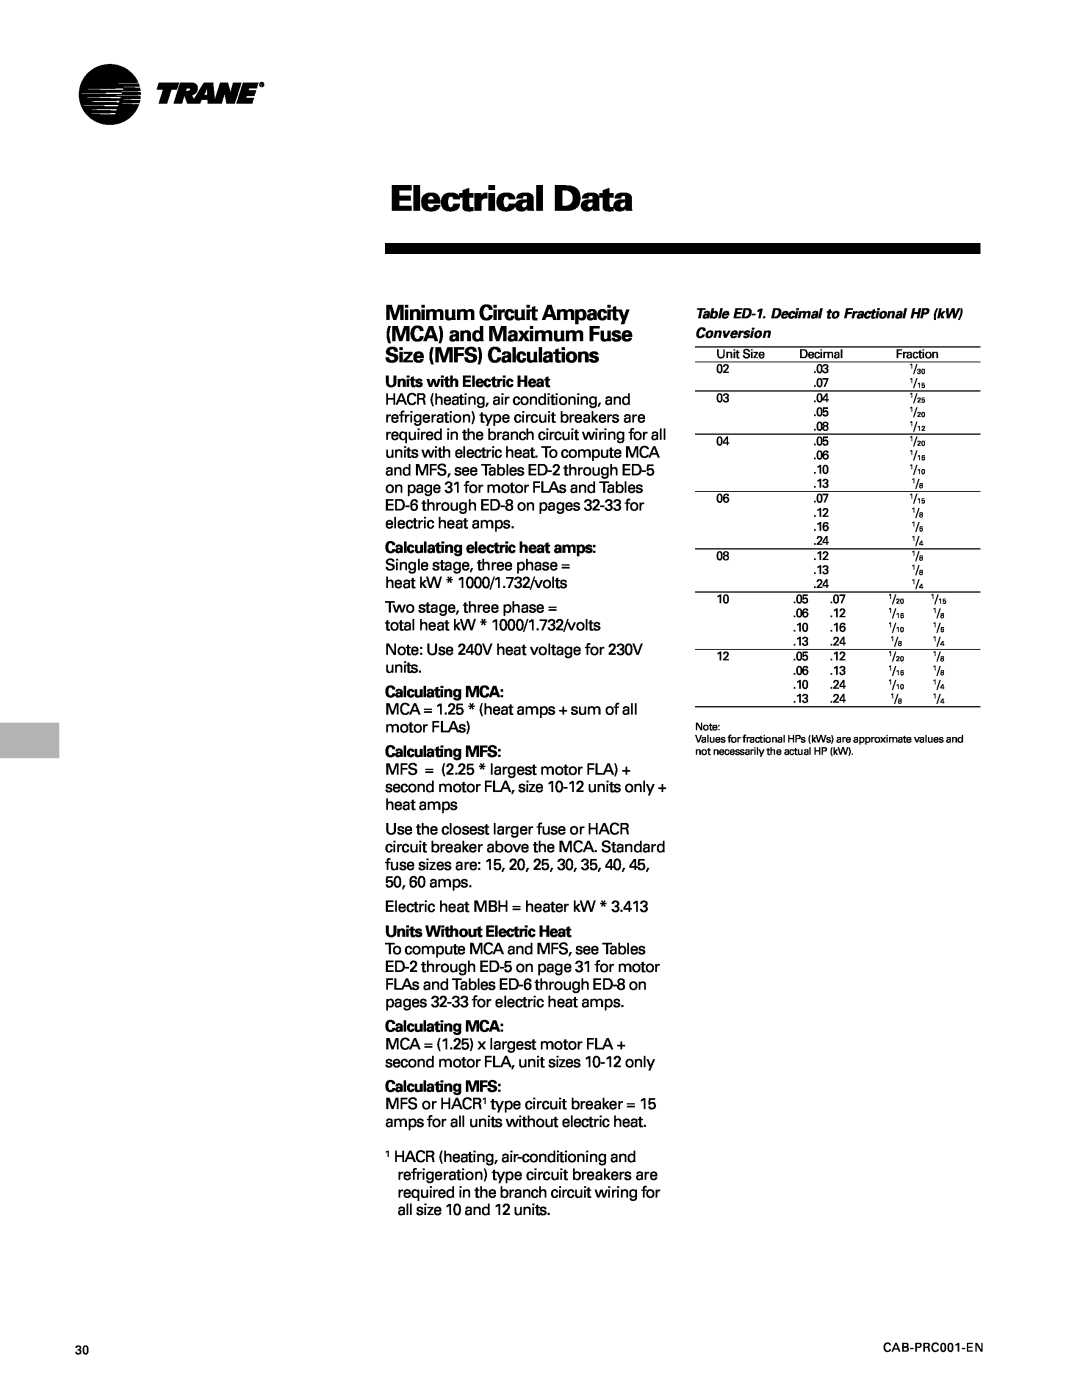 Trane CAB-PRC001-EN manual Electrical Data, Minimum Circuit Ampacity MCA and Maximum Fuse, Size MFS Calculations 